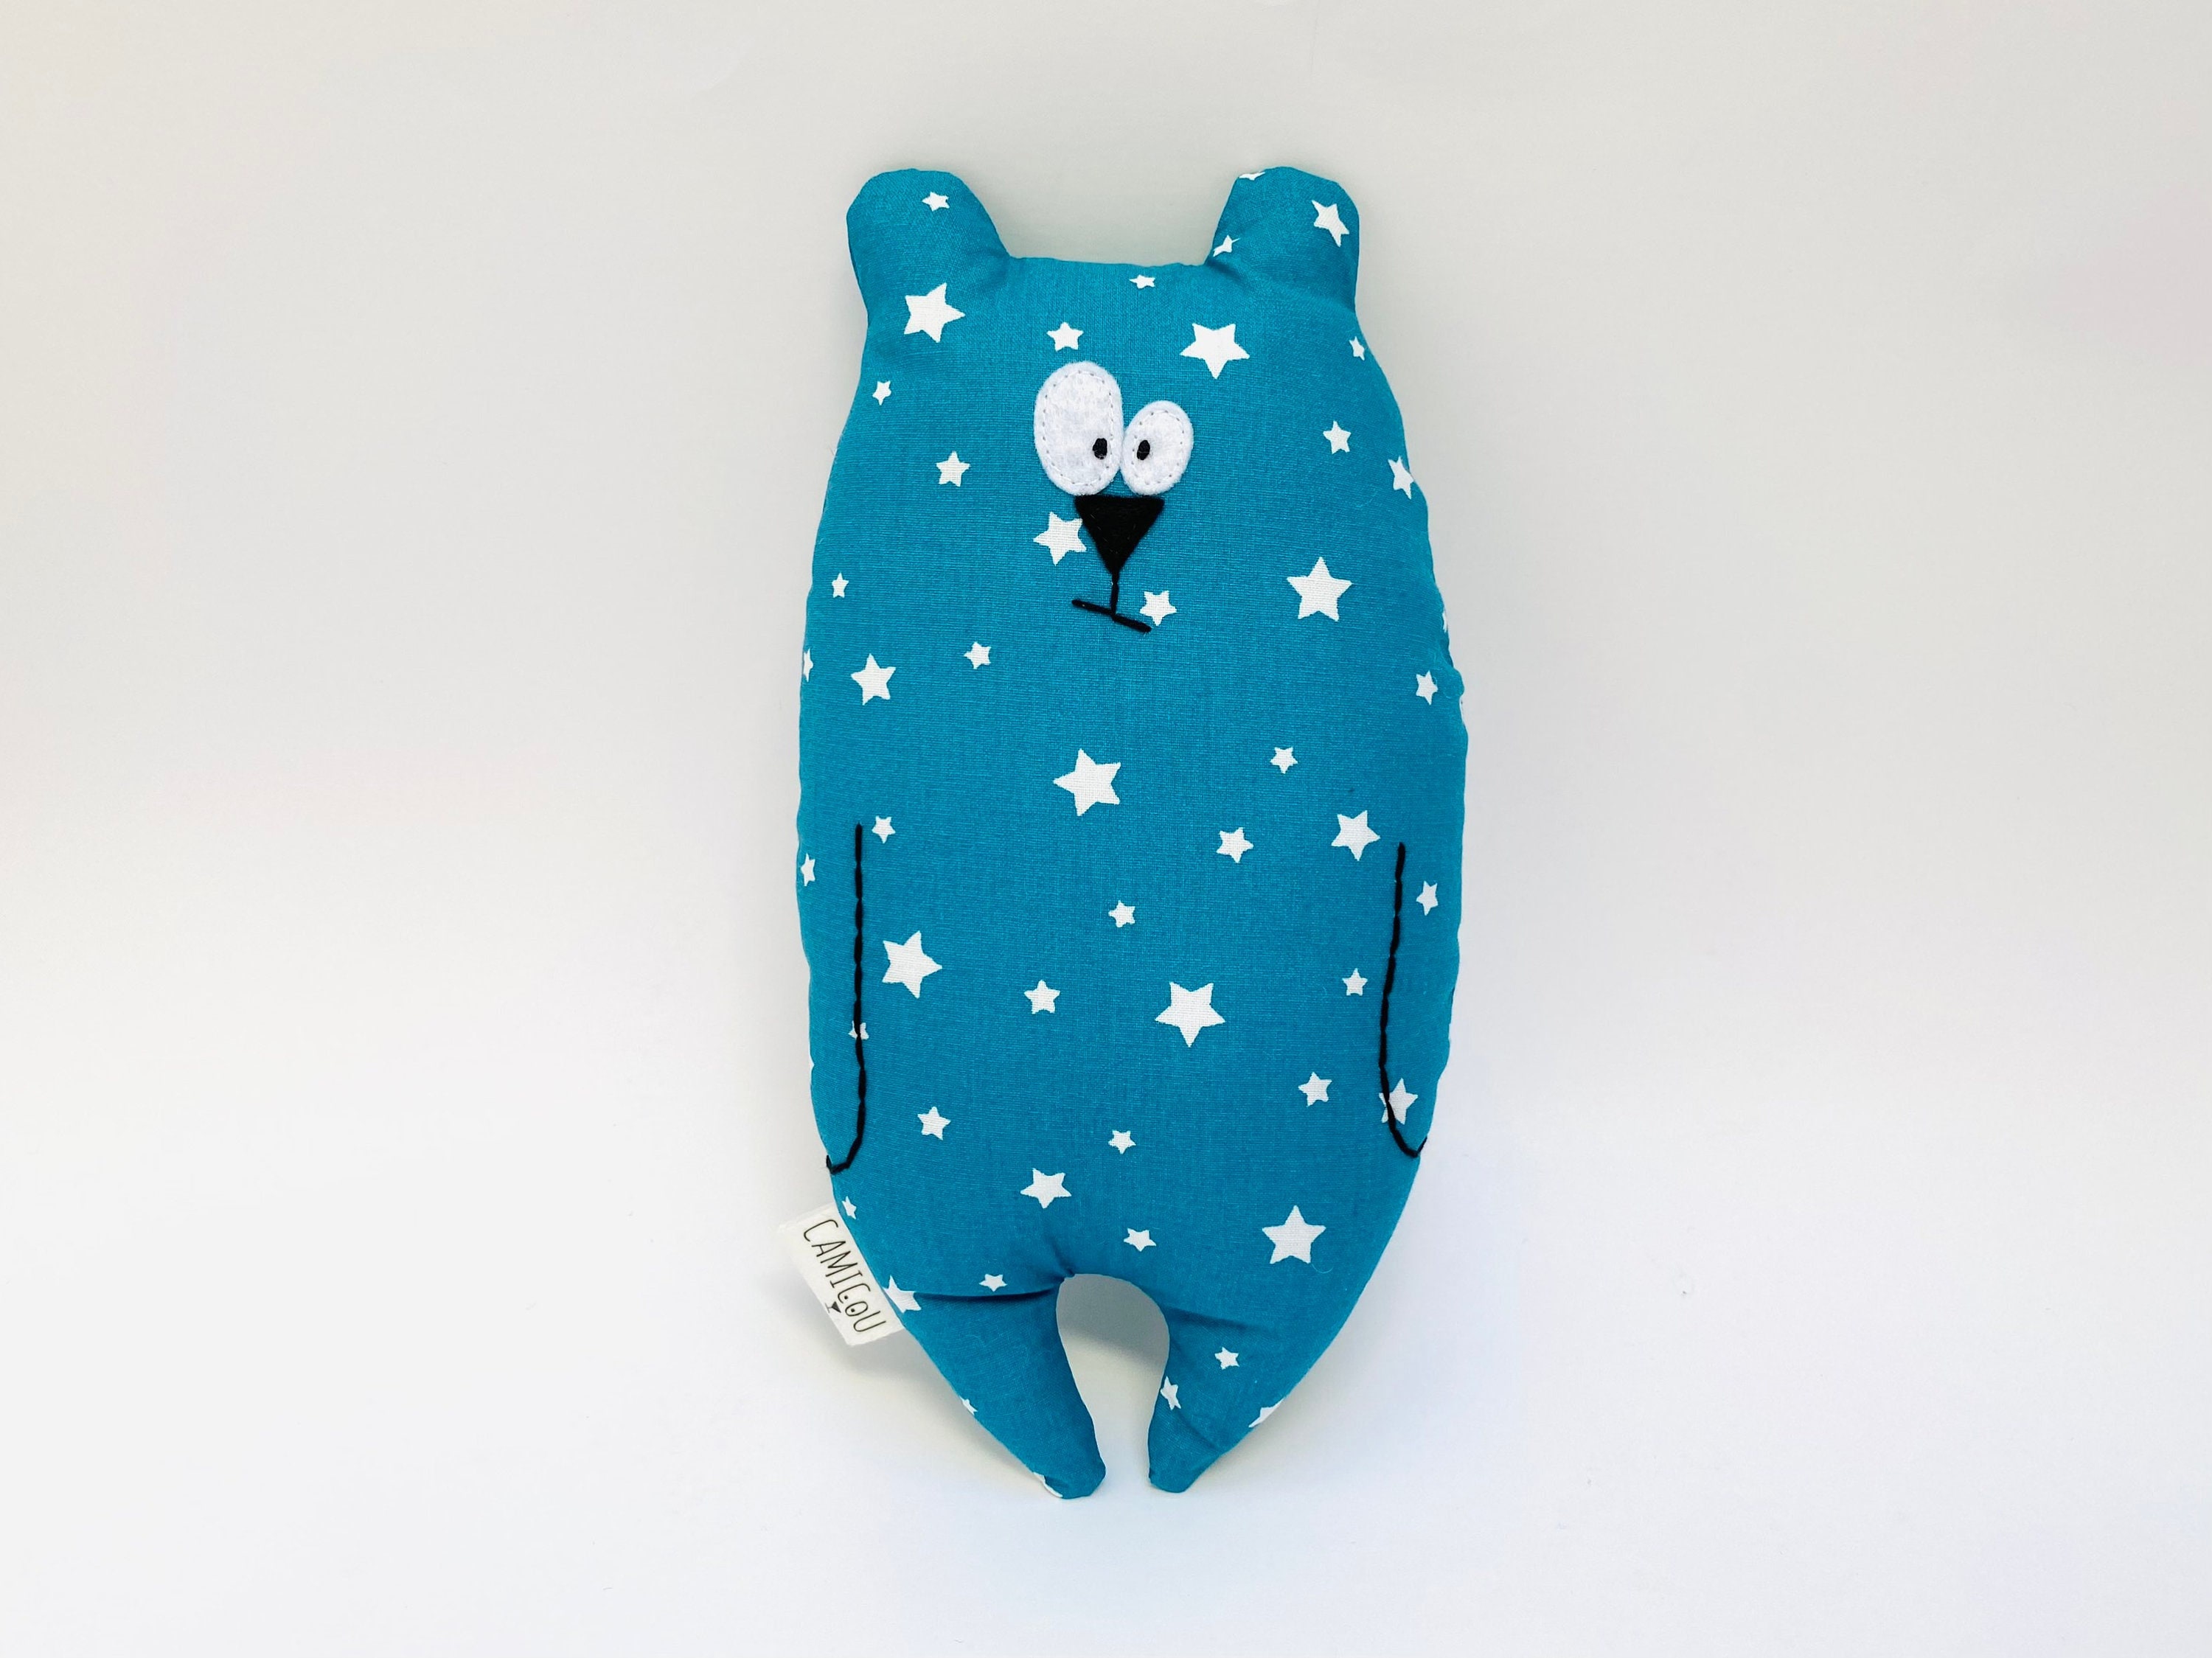 Birth gift Fabric blue patterns stars Plush first name Doudou bear Jean-Jacques customizable